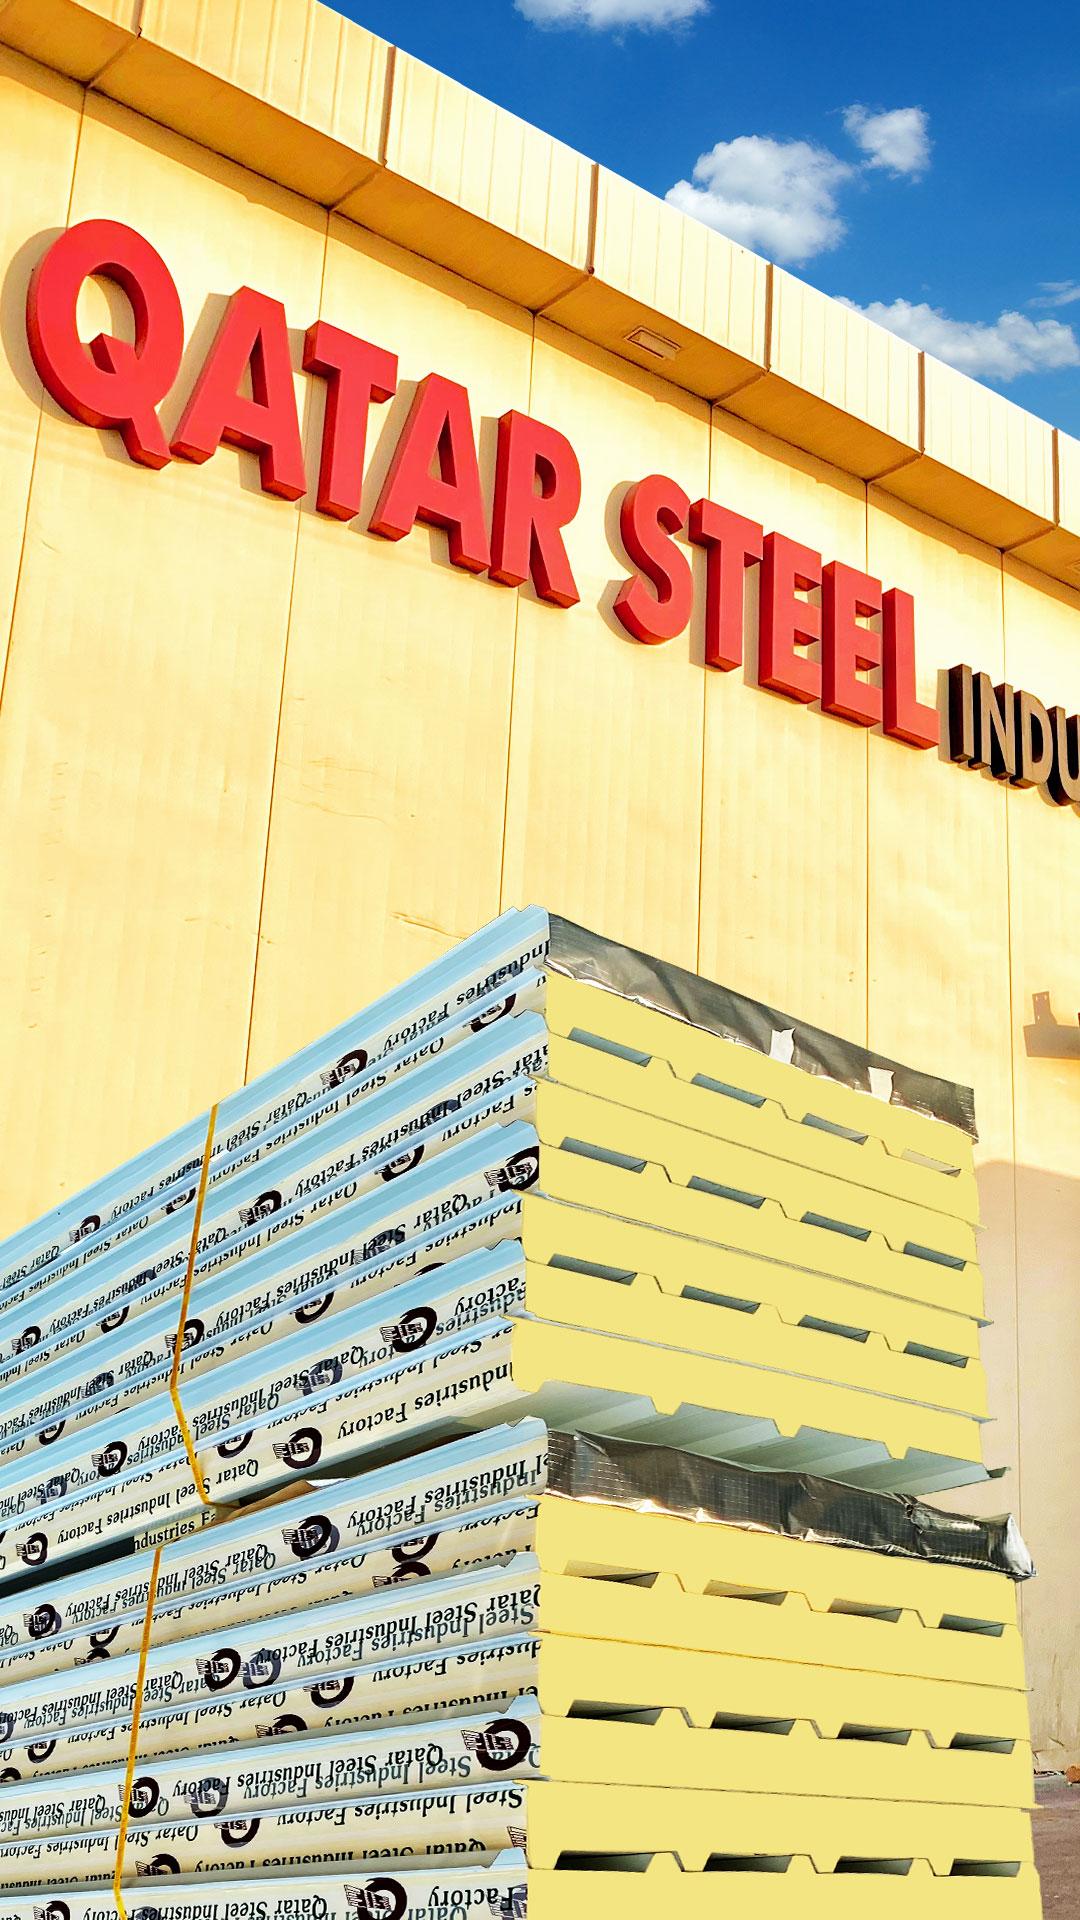 Qatar CE-Certified Steel Products: Sandwich Roof Panels & Kwik Roofing Sheets